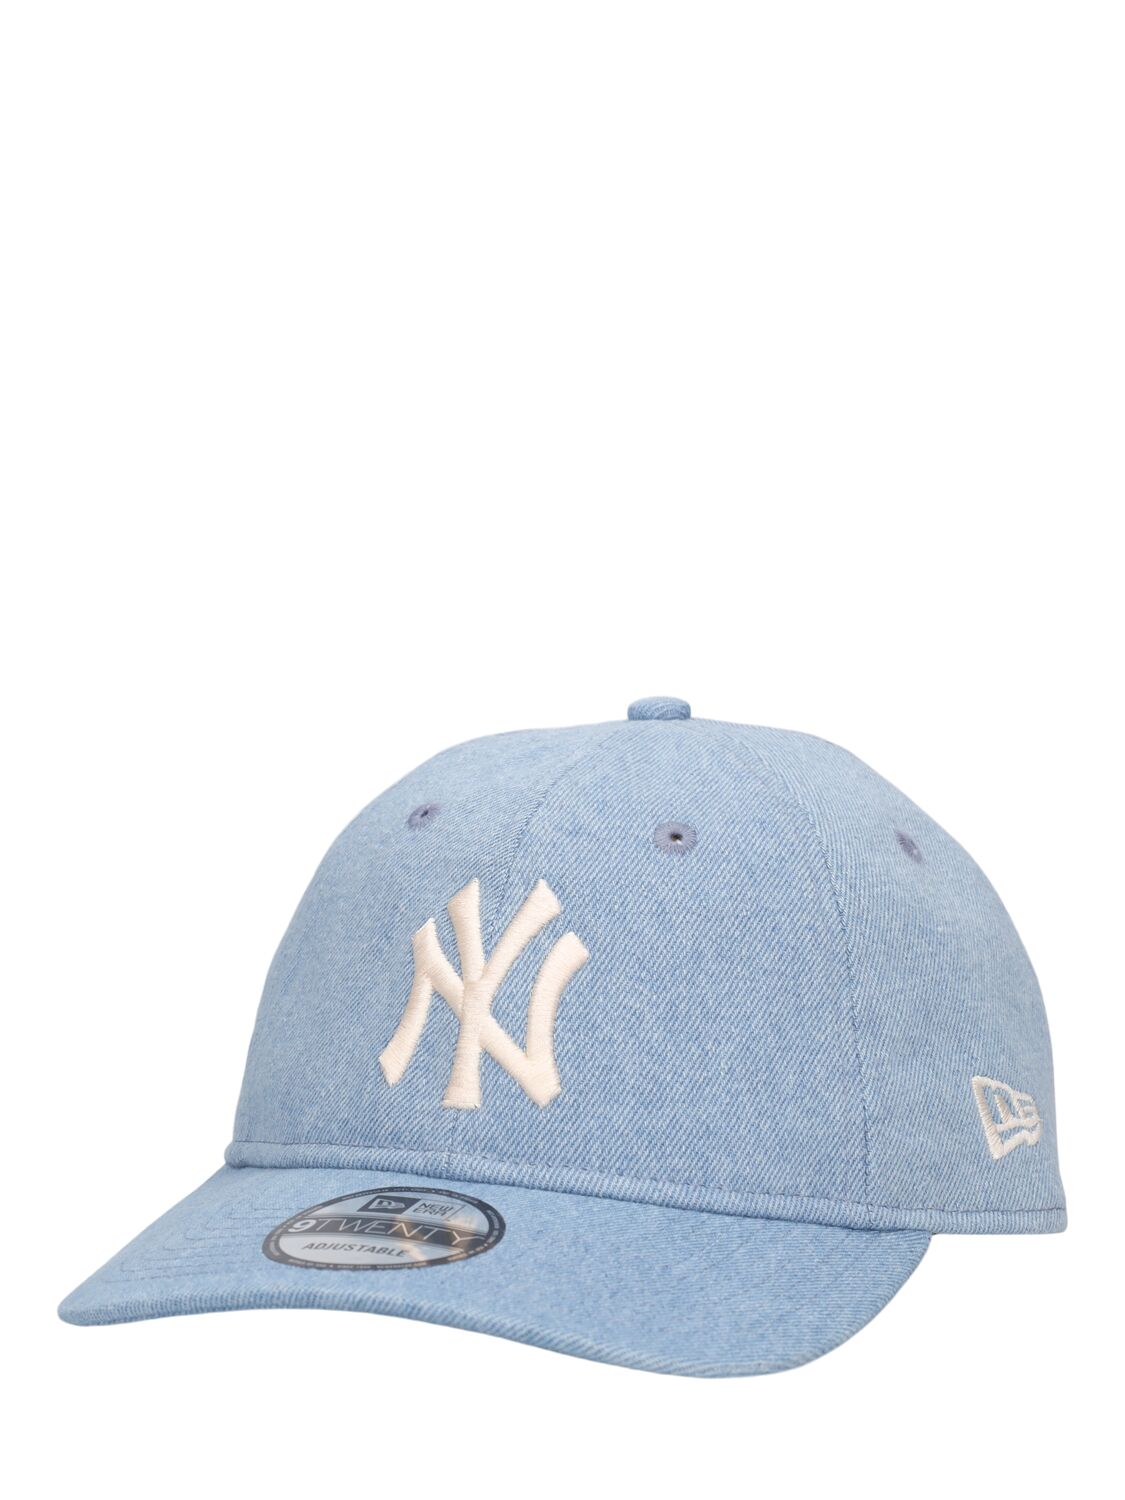 WASHED DENIM NEW YORK YANKEES棒球帽